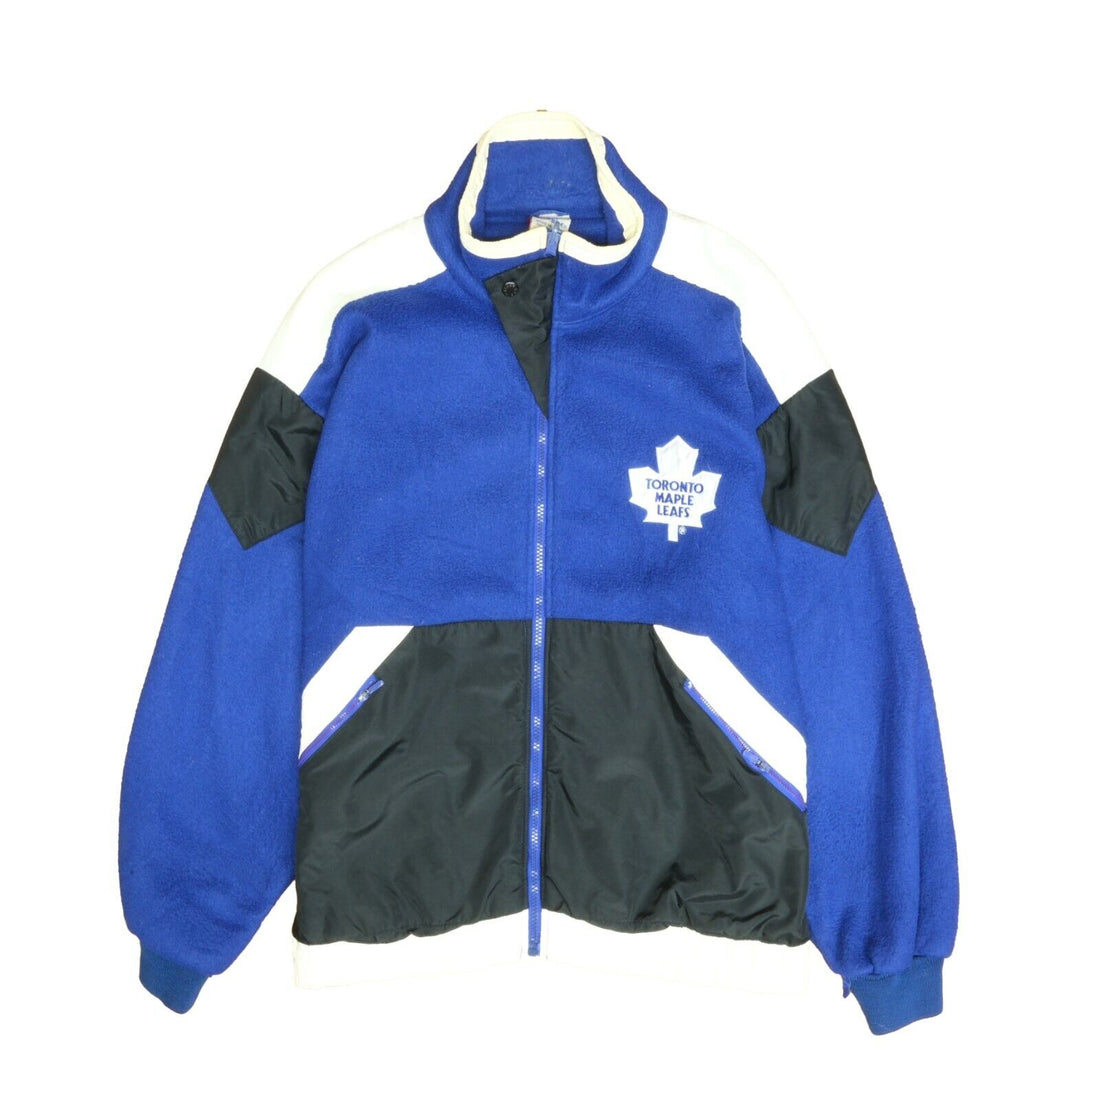 Vintage 90s Toronto Maple Leafs Starter Jacket -  Norway